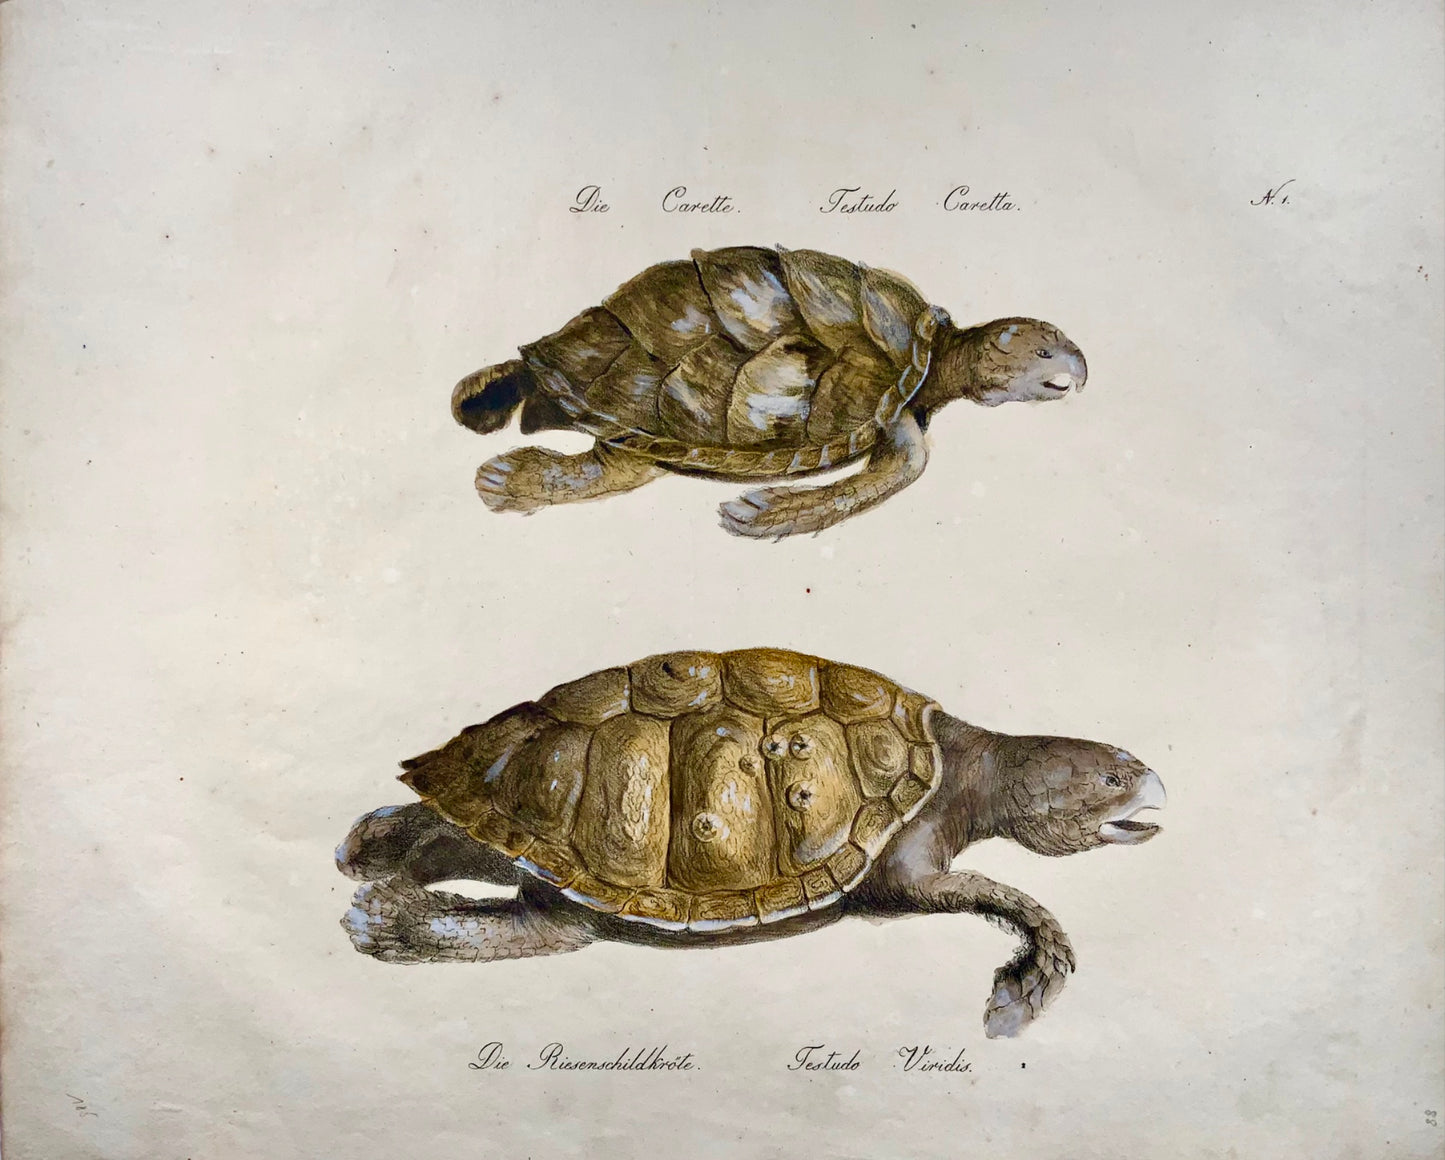 1816 Turtles, Brodtmann, Imp. folio 42.5 cm, incunabula of lithography